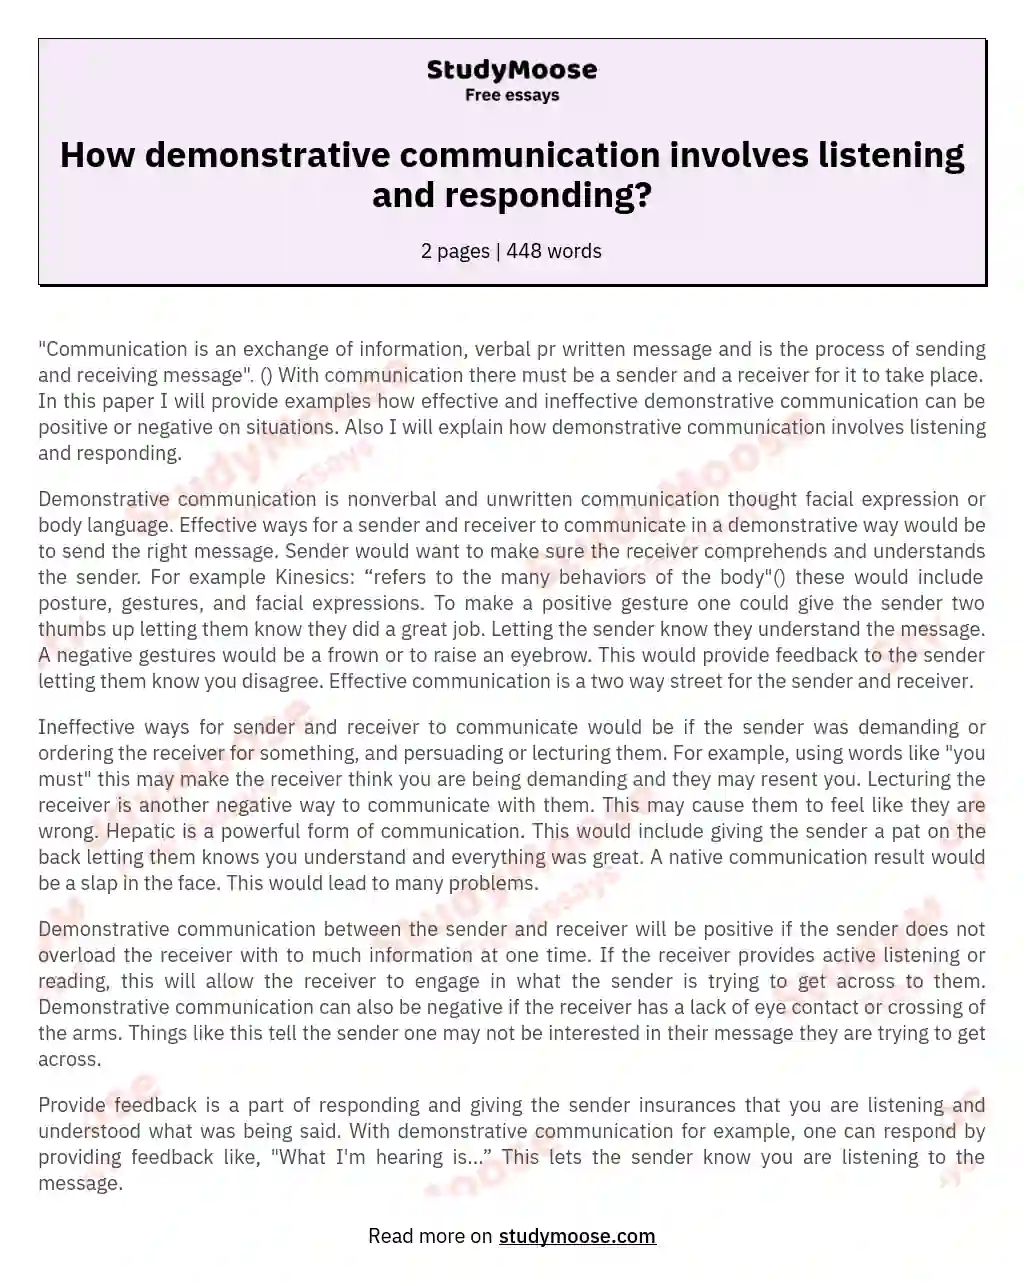 How demonstrative communication involves listening and responding?